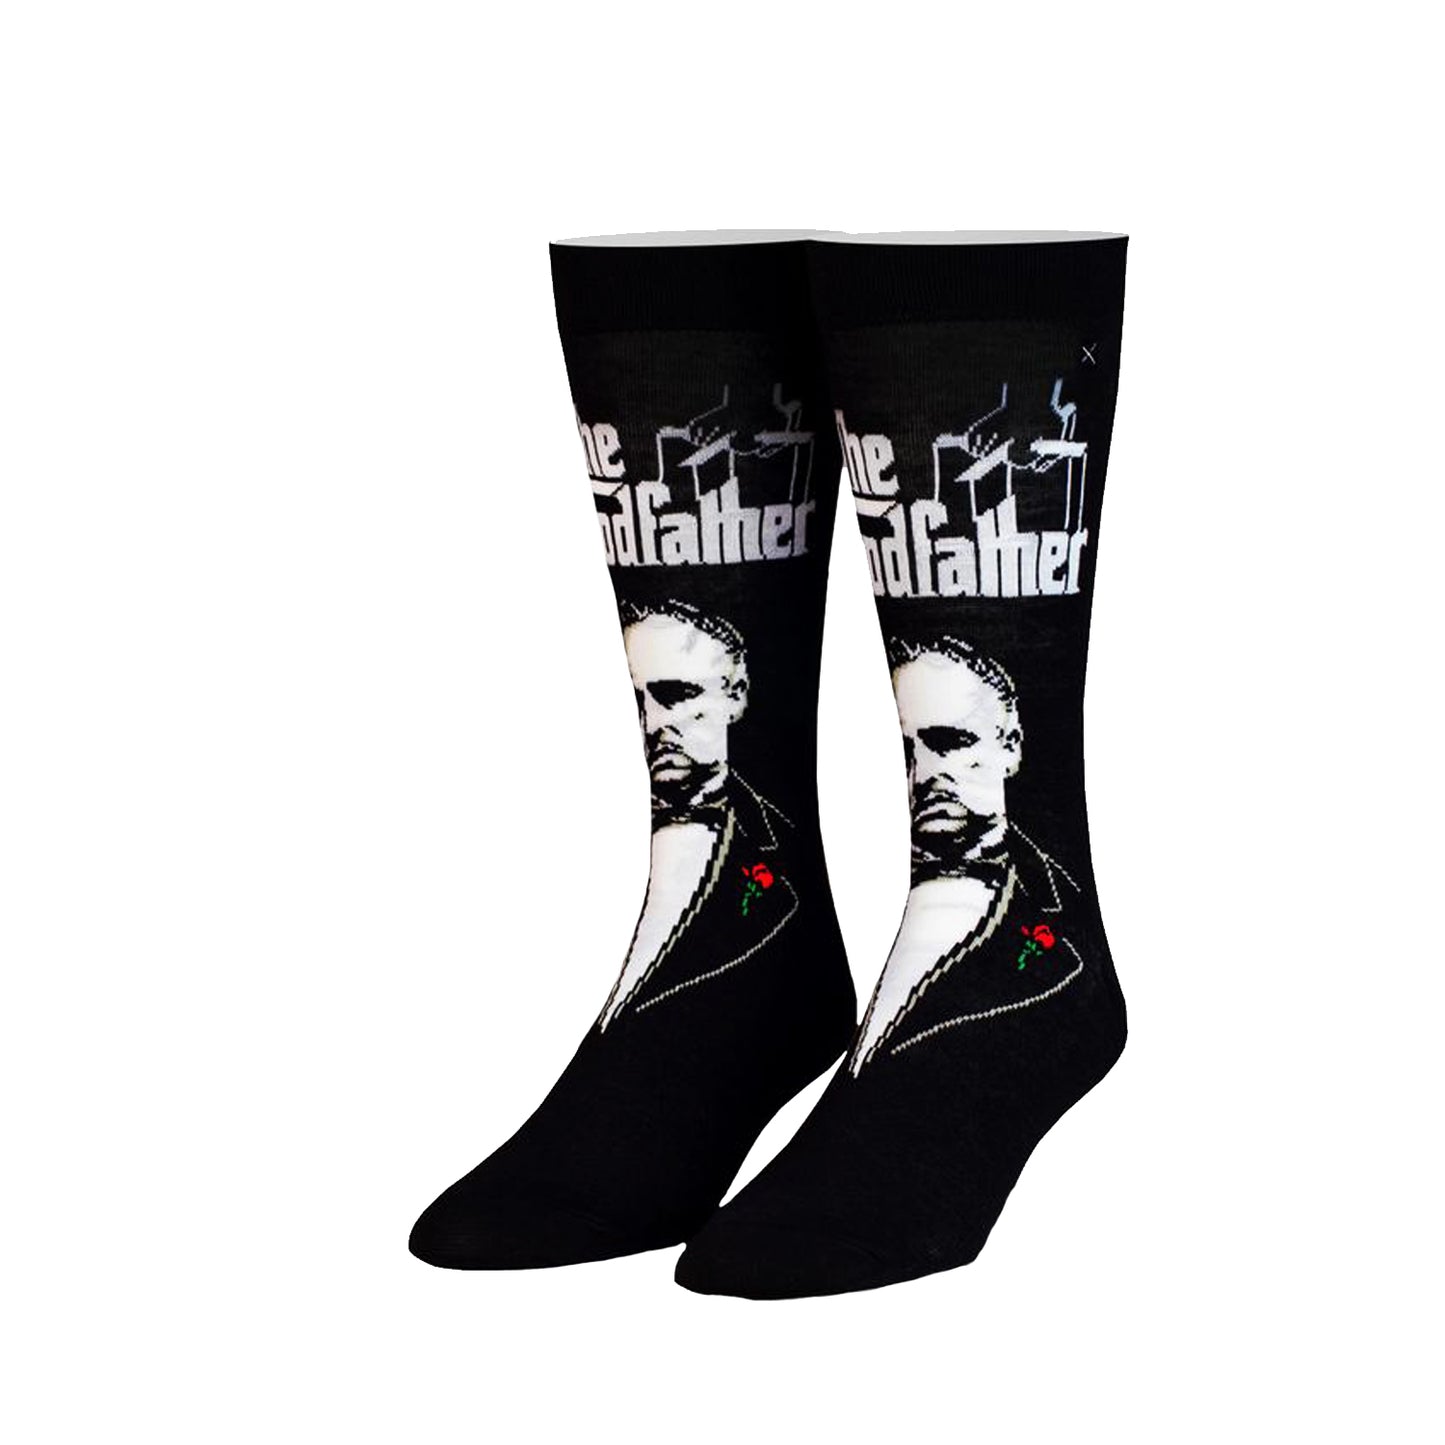 Odd Sox Men's Crew Socks - Vito (The Godfather)